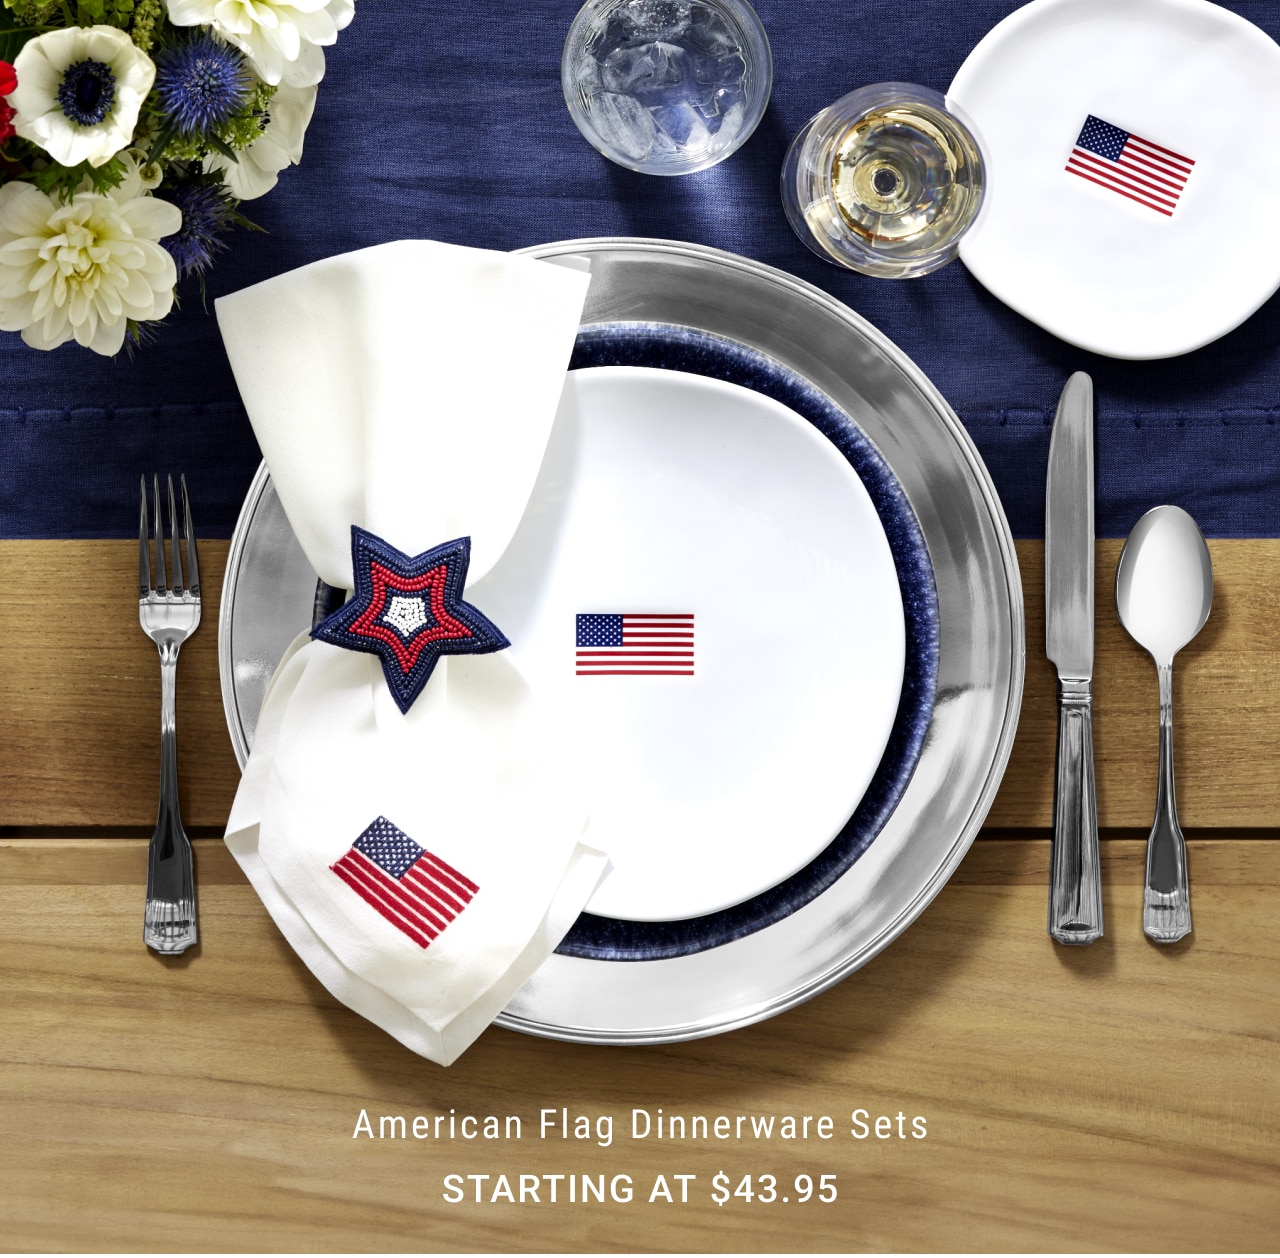 American Flag Dinnerware Sets Starting at $43.95